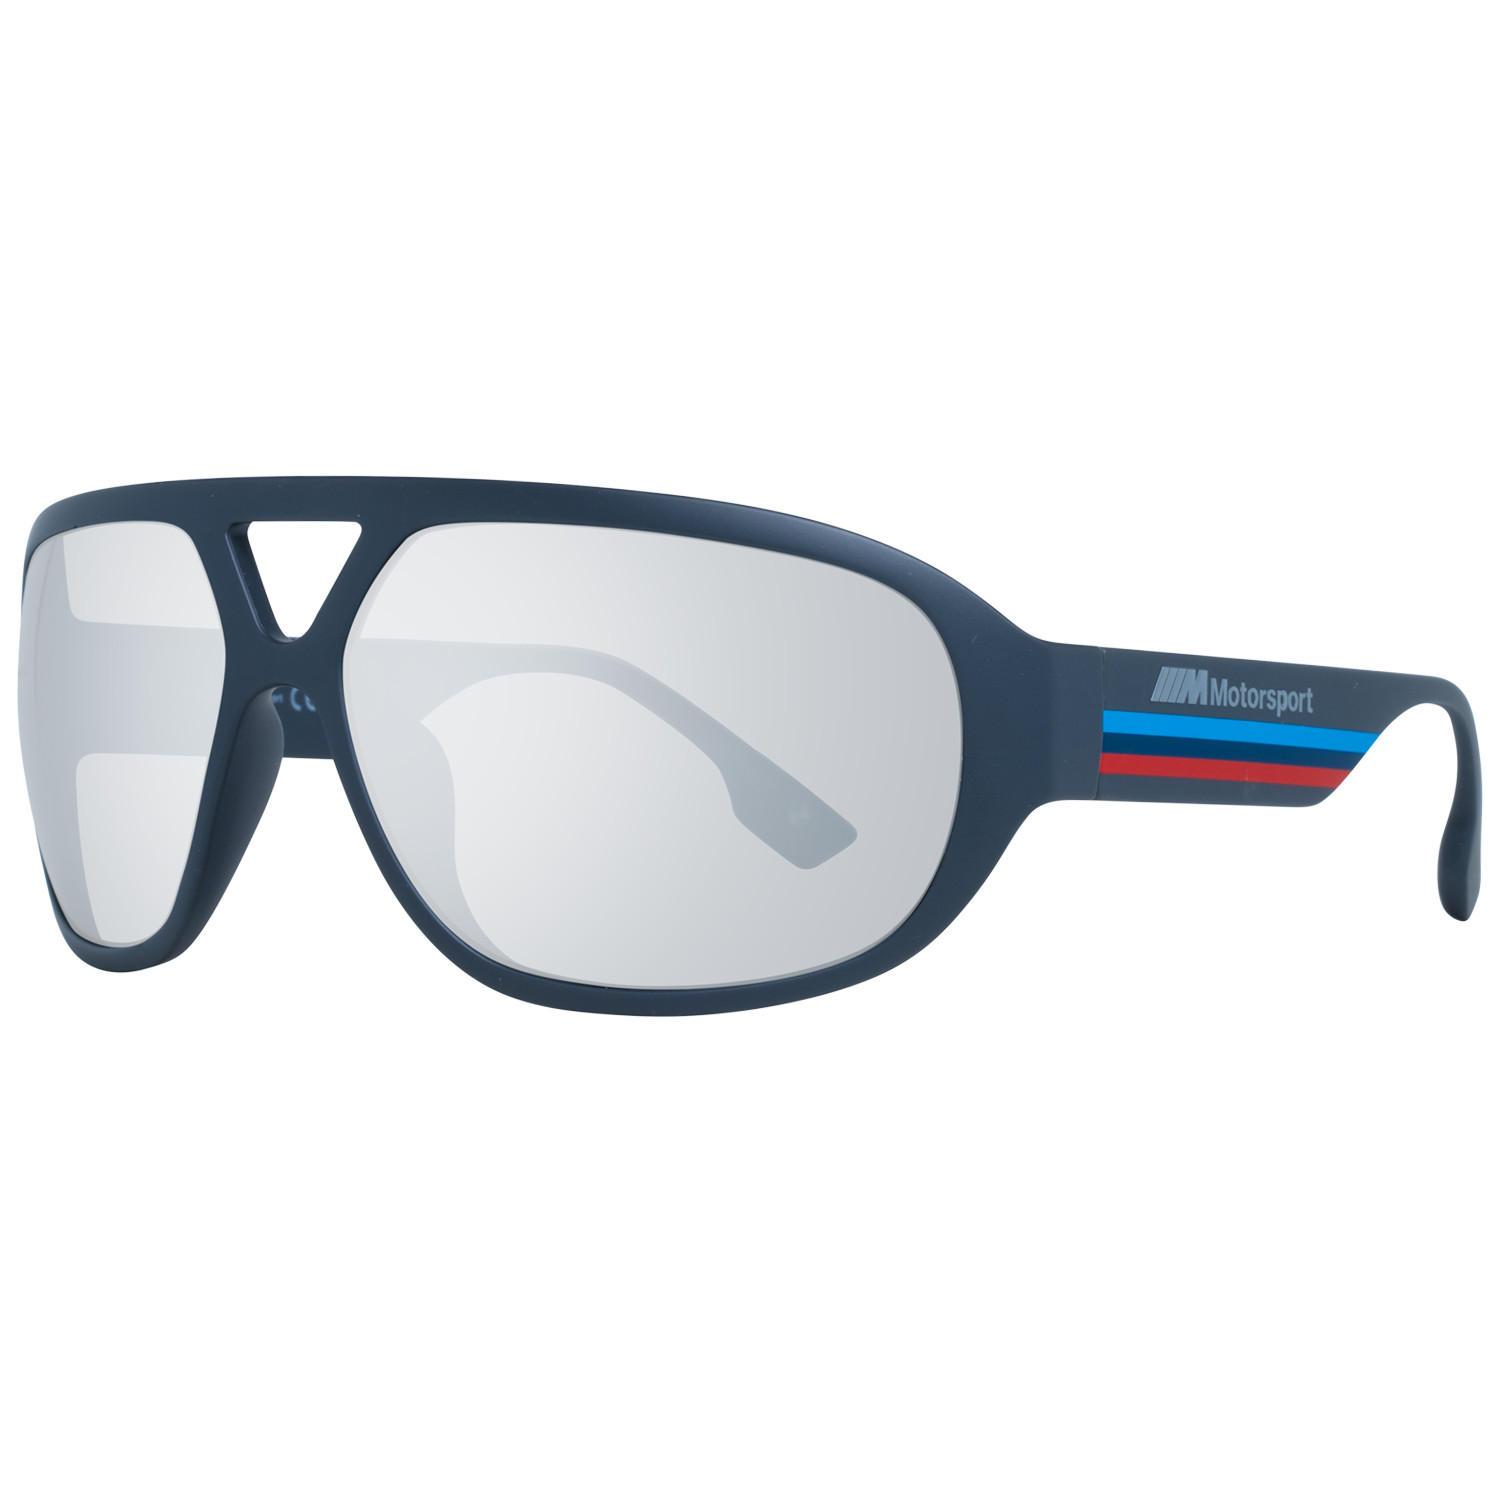 BMW Motorsport BS 0009 20C 64 Men sunglasses - Contact lense